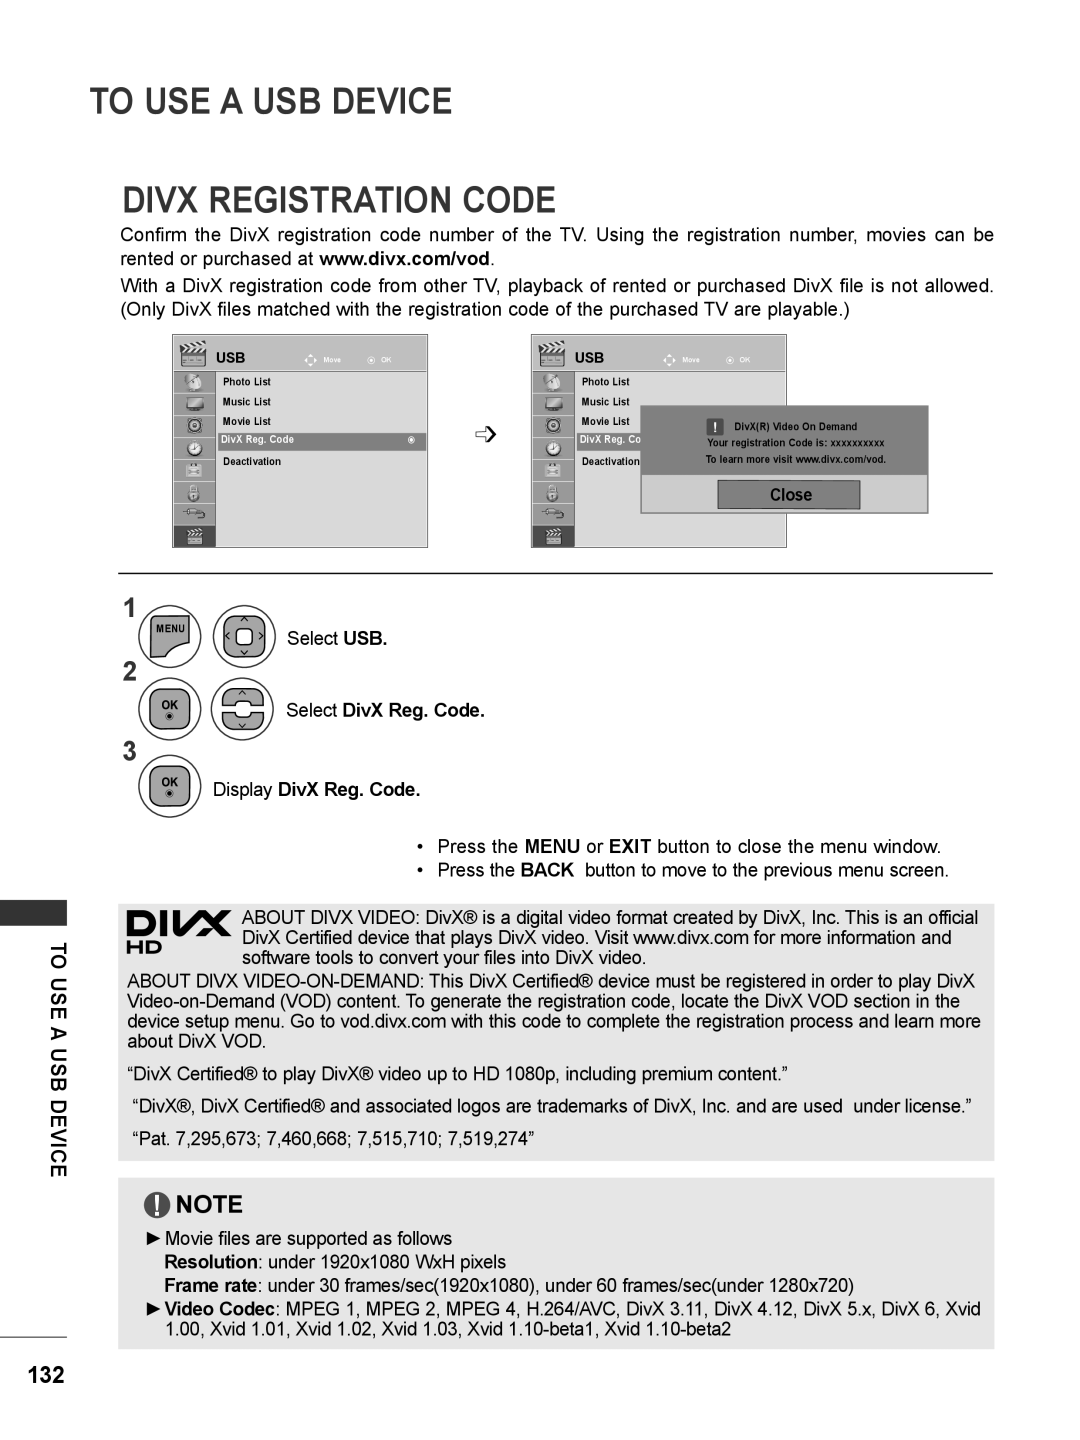 LG Electronics M2780DF To Use A Usb Device Divx Registration Code, Select DivX Reg. Code, Display DivX Reg. Code 